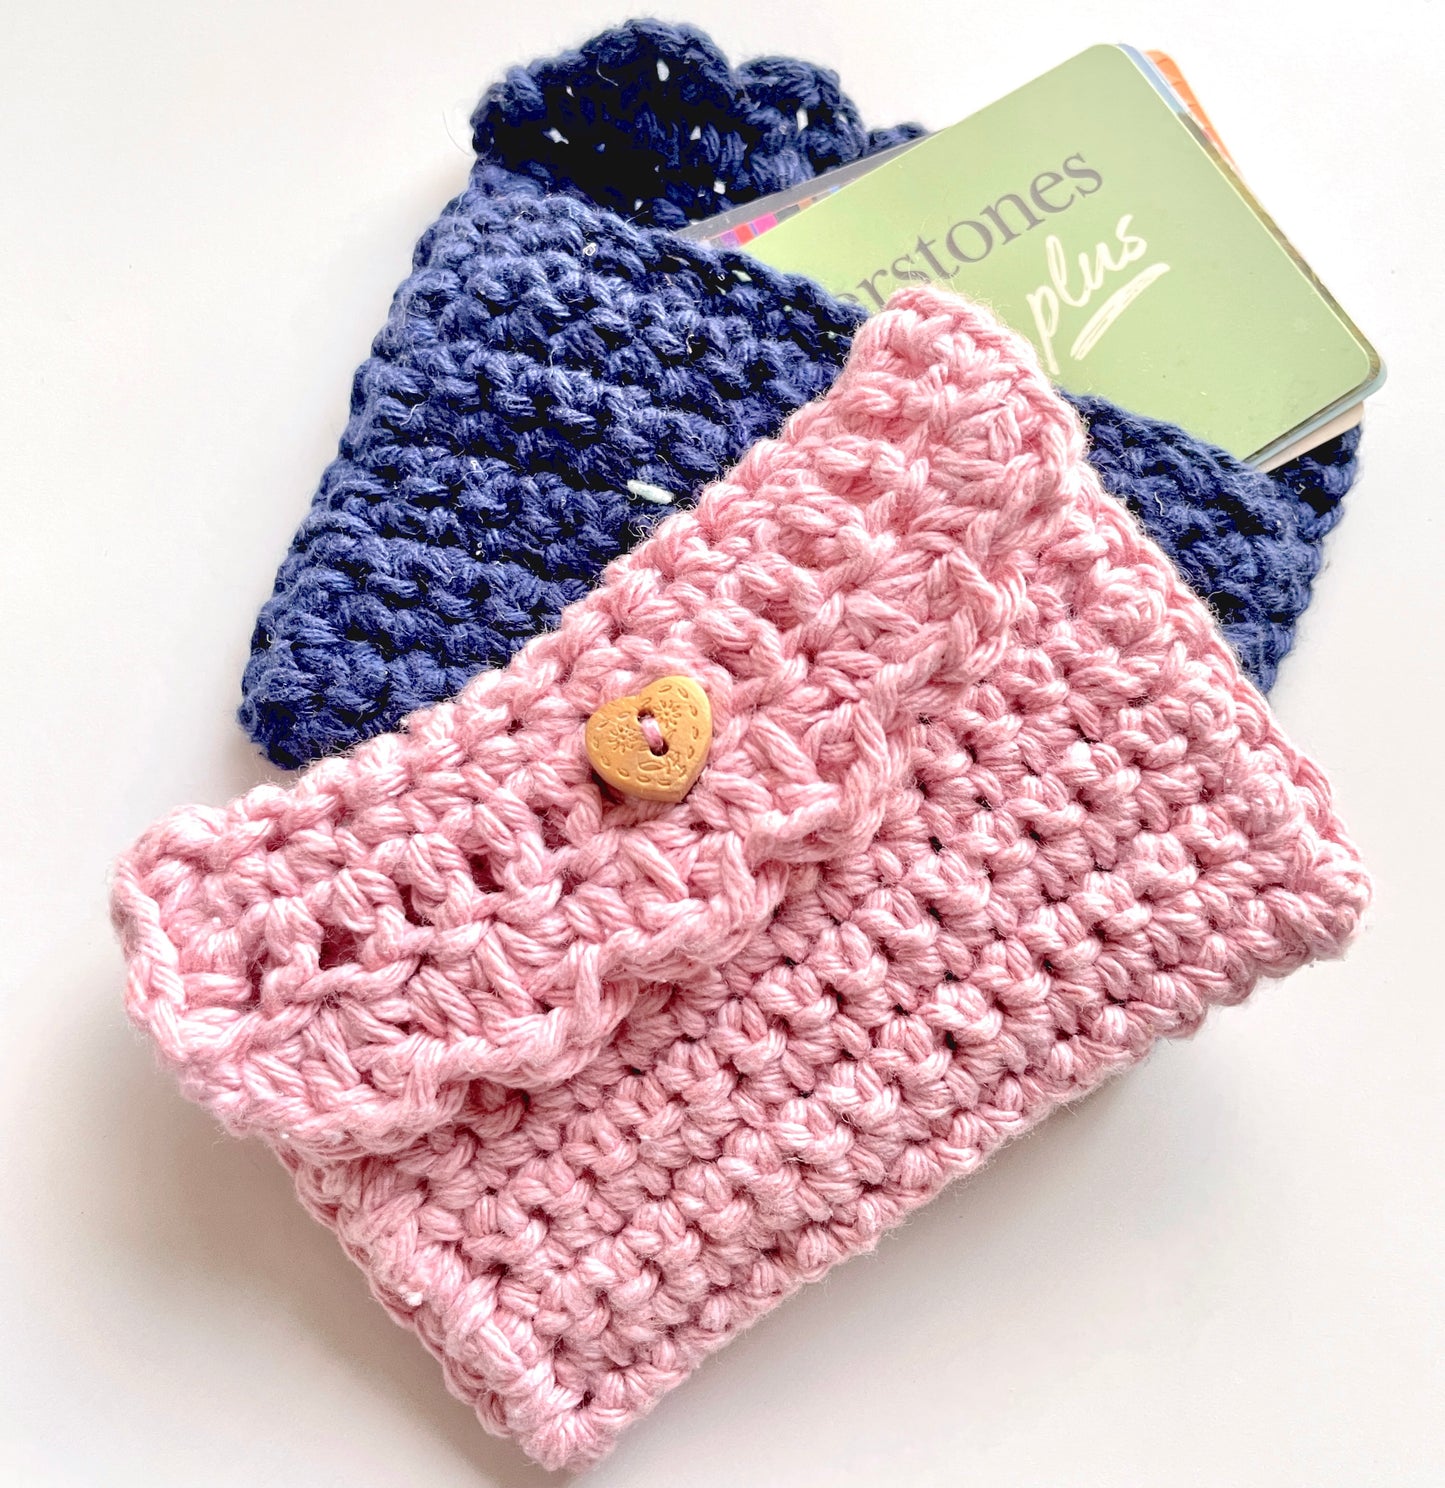 Ticket or Loyalty Card Holder/Handy Pouch Crochet Pattern